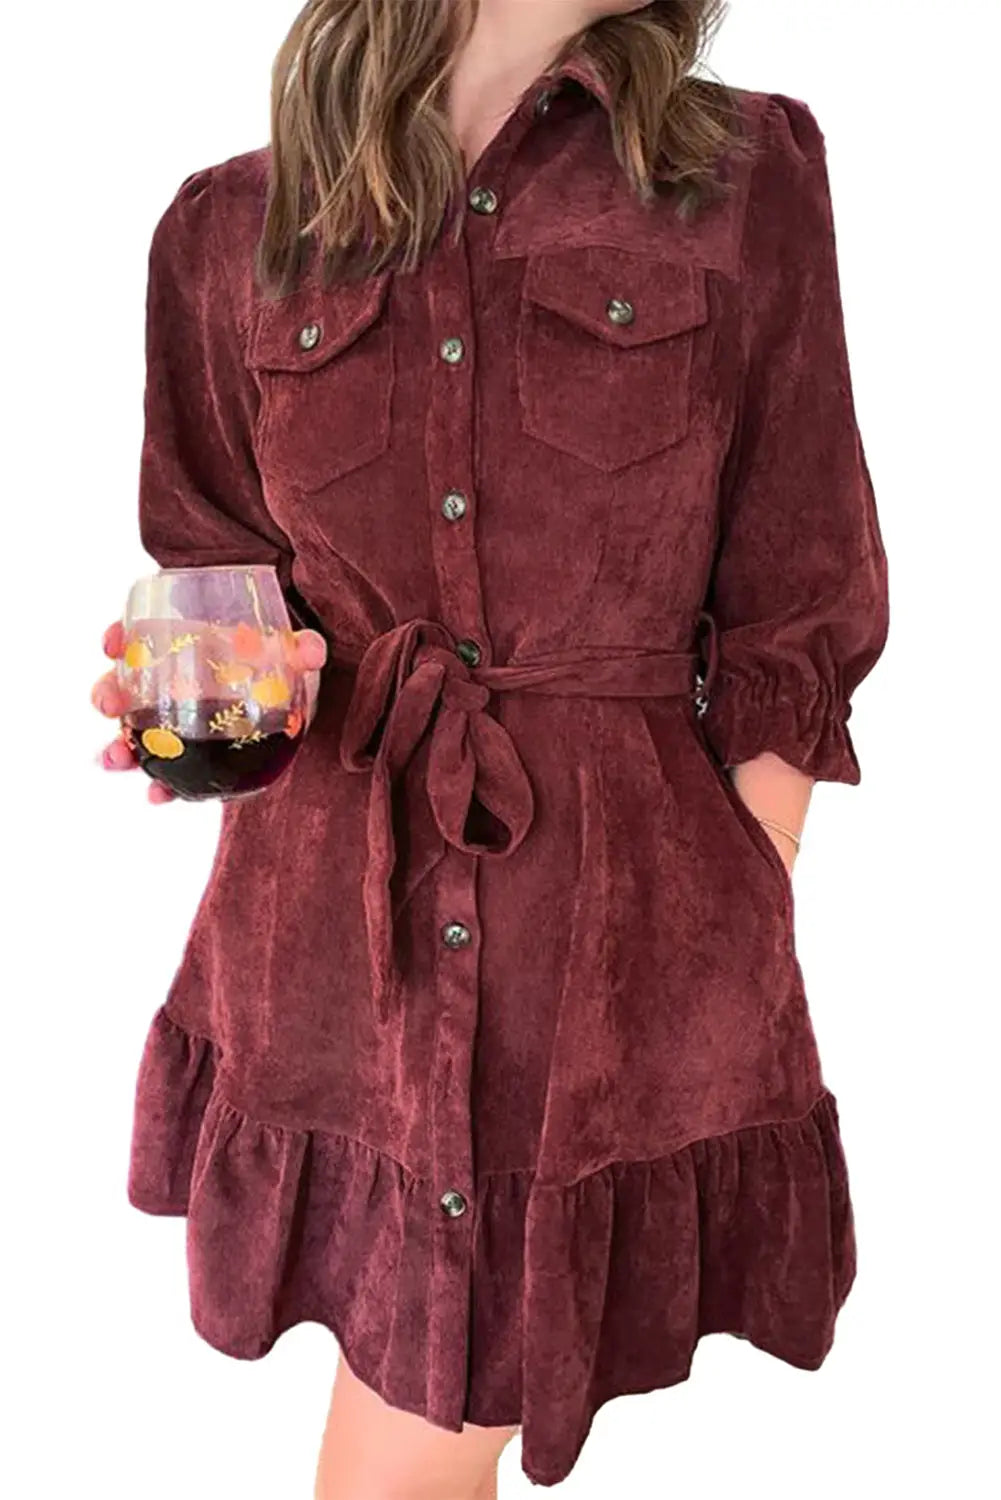 Red dahlia corduroy dress - mini dresses